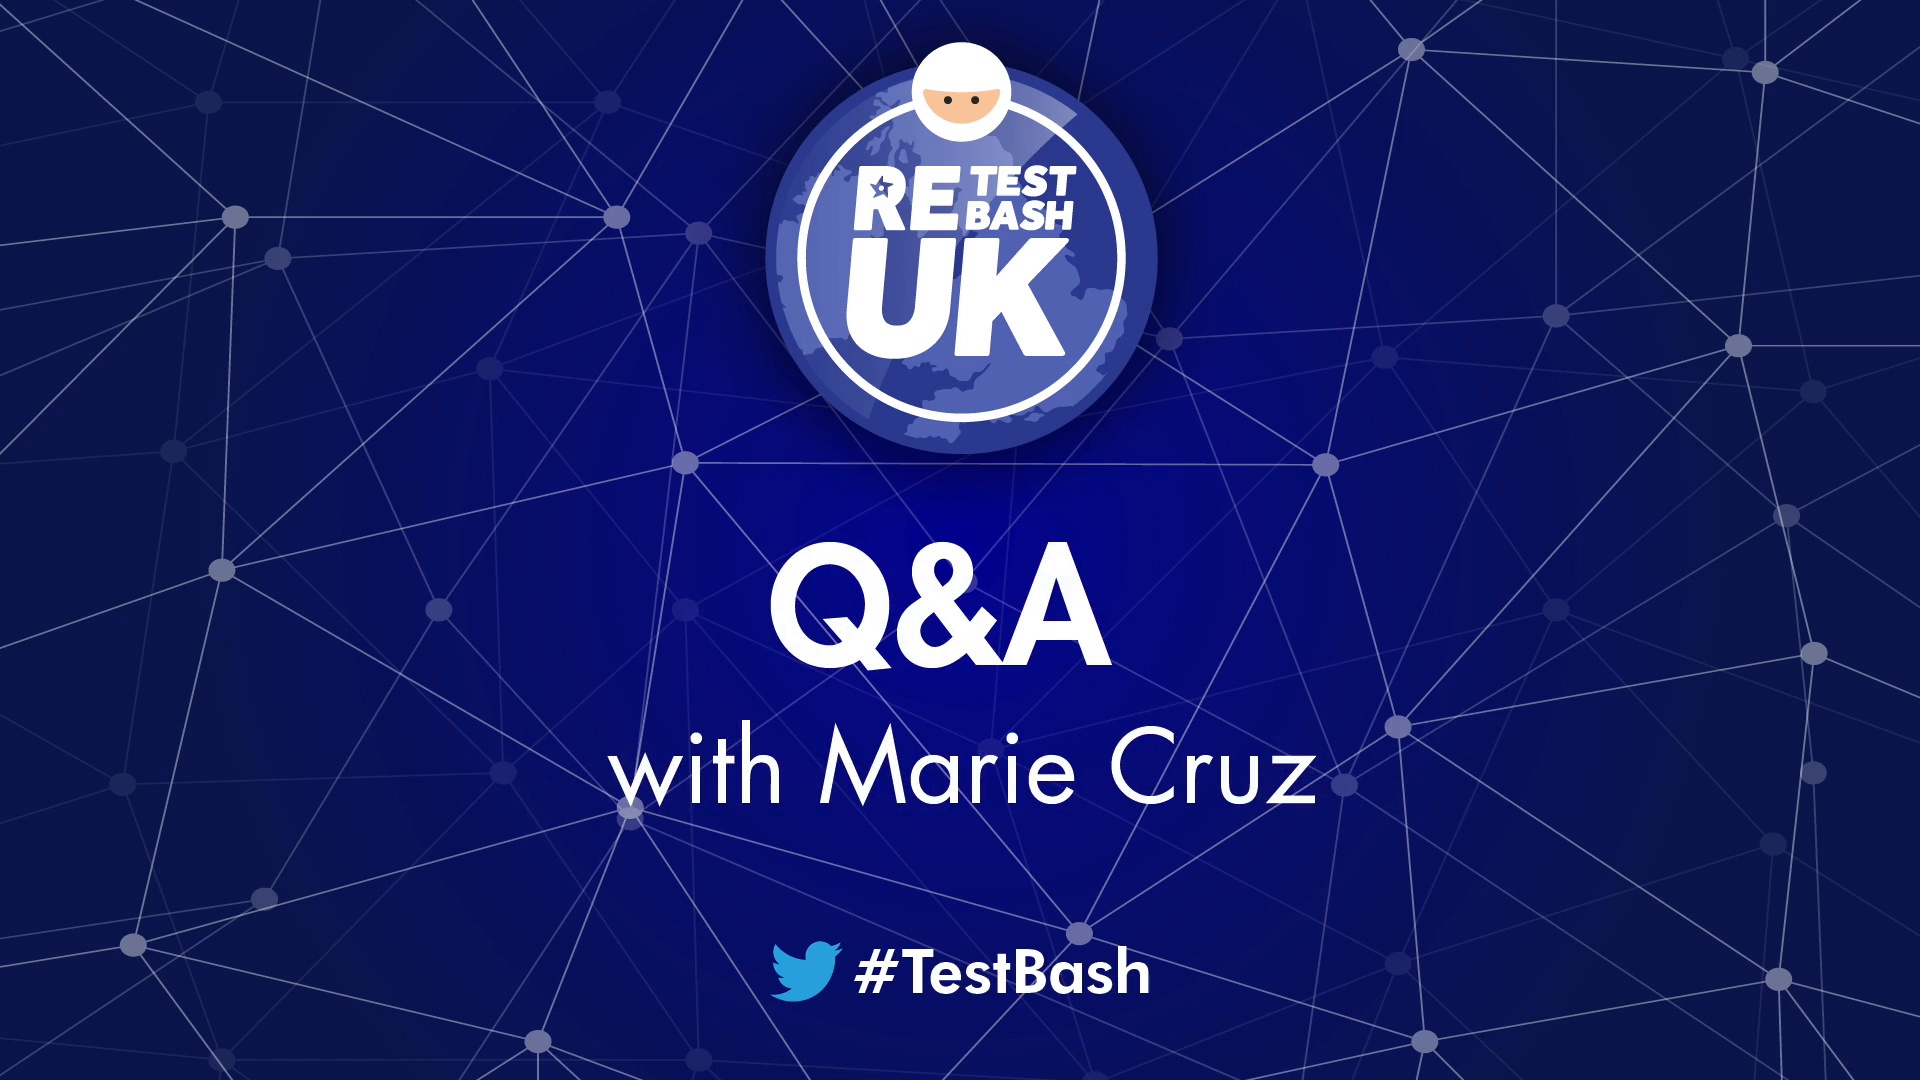 ReTestBash UK 2022: Live Q&A with Marie Cruz